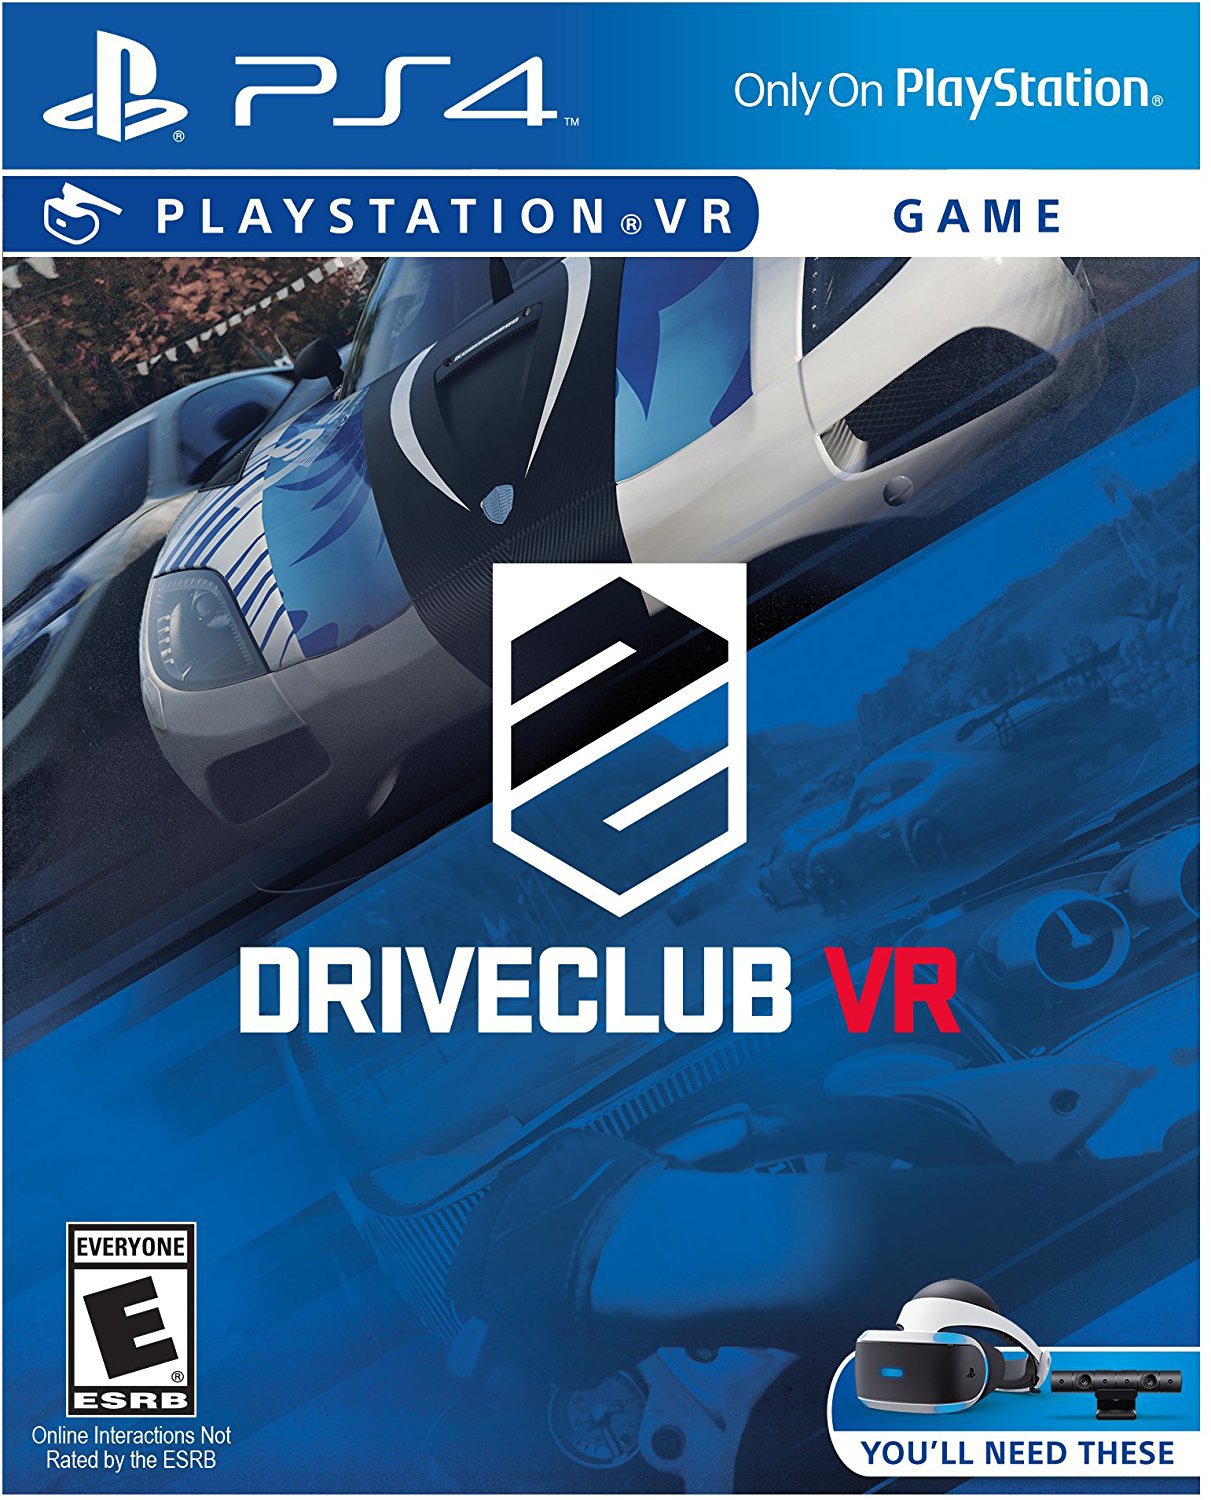 Drive Club VR